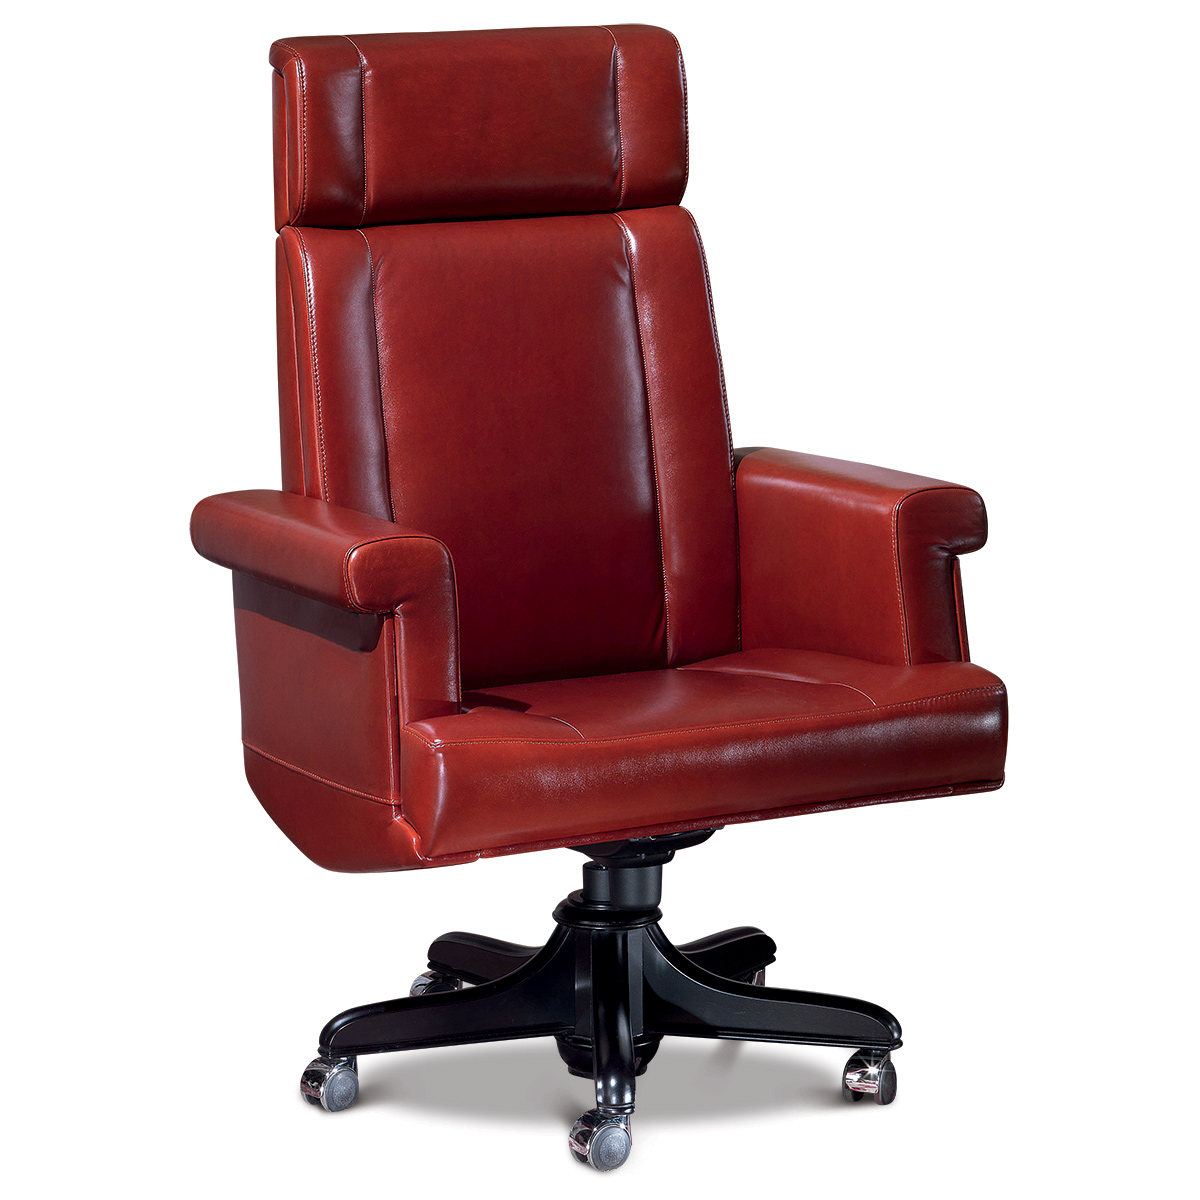 Office armchair “KENNEDY” made in italy su misura